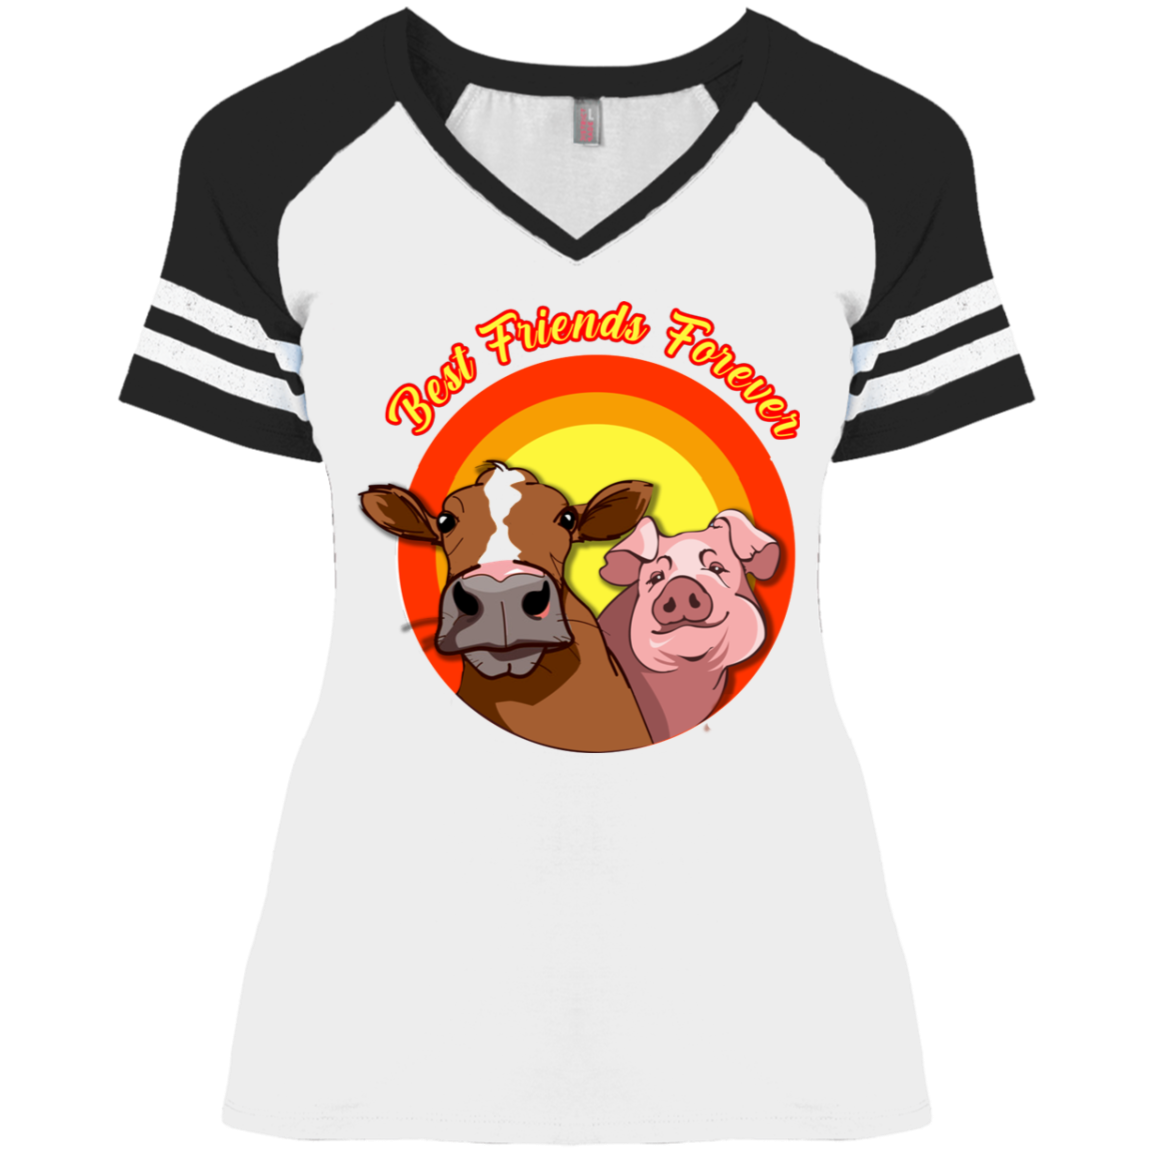 ArtichokeUSA Custom Design. Best Friends Forever. Bacon Cheese Burger. Ladies' Game V-Neck T-Shirt